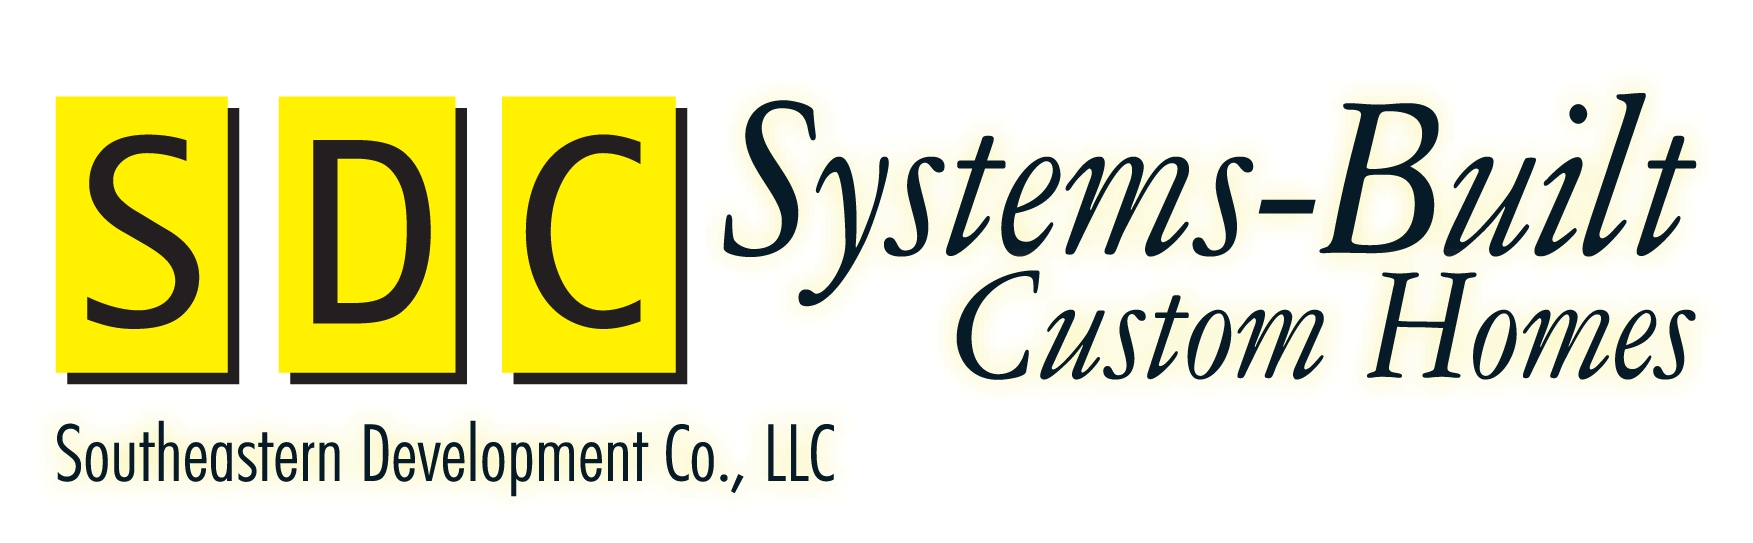 Southeastern Development Co, LLC company logo